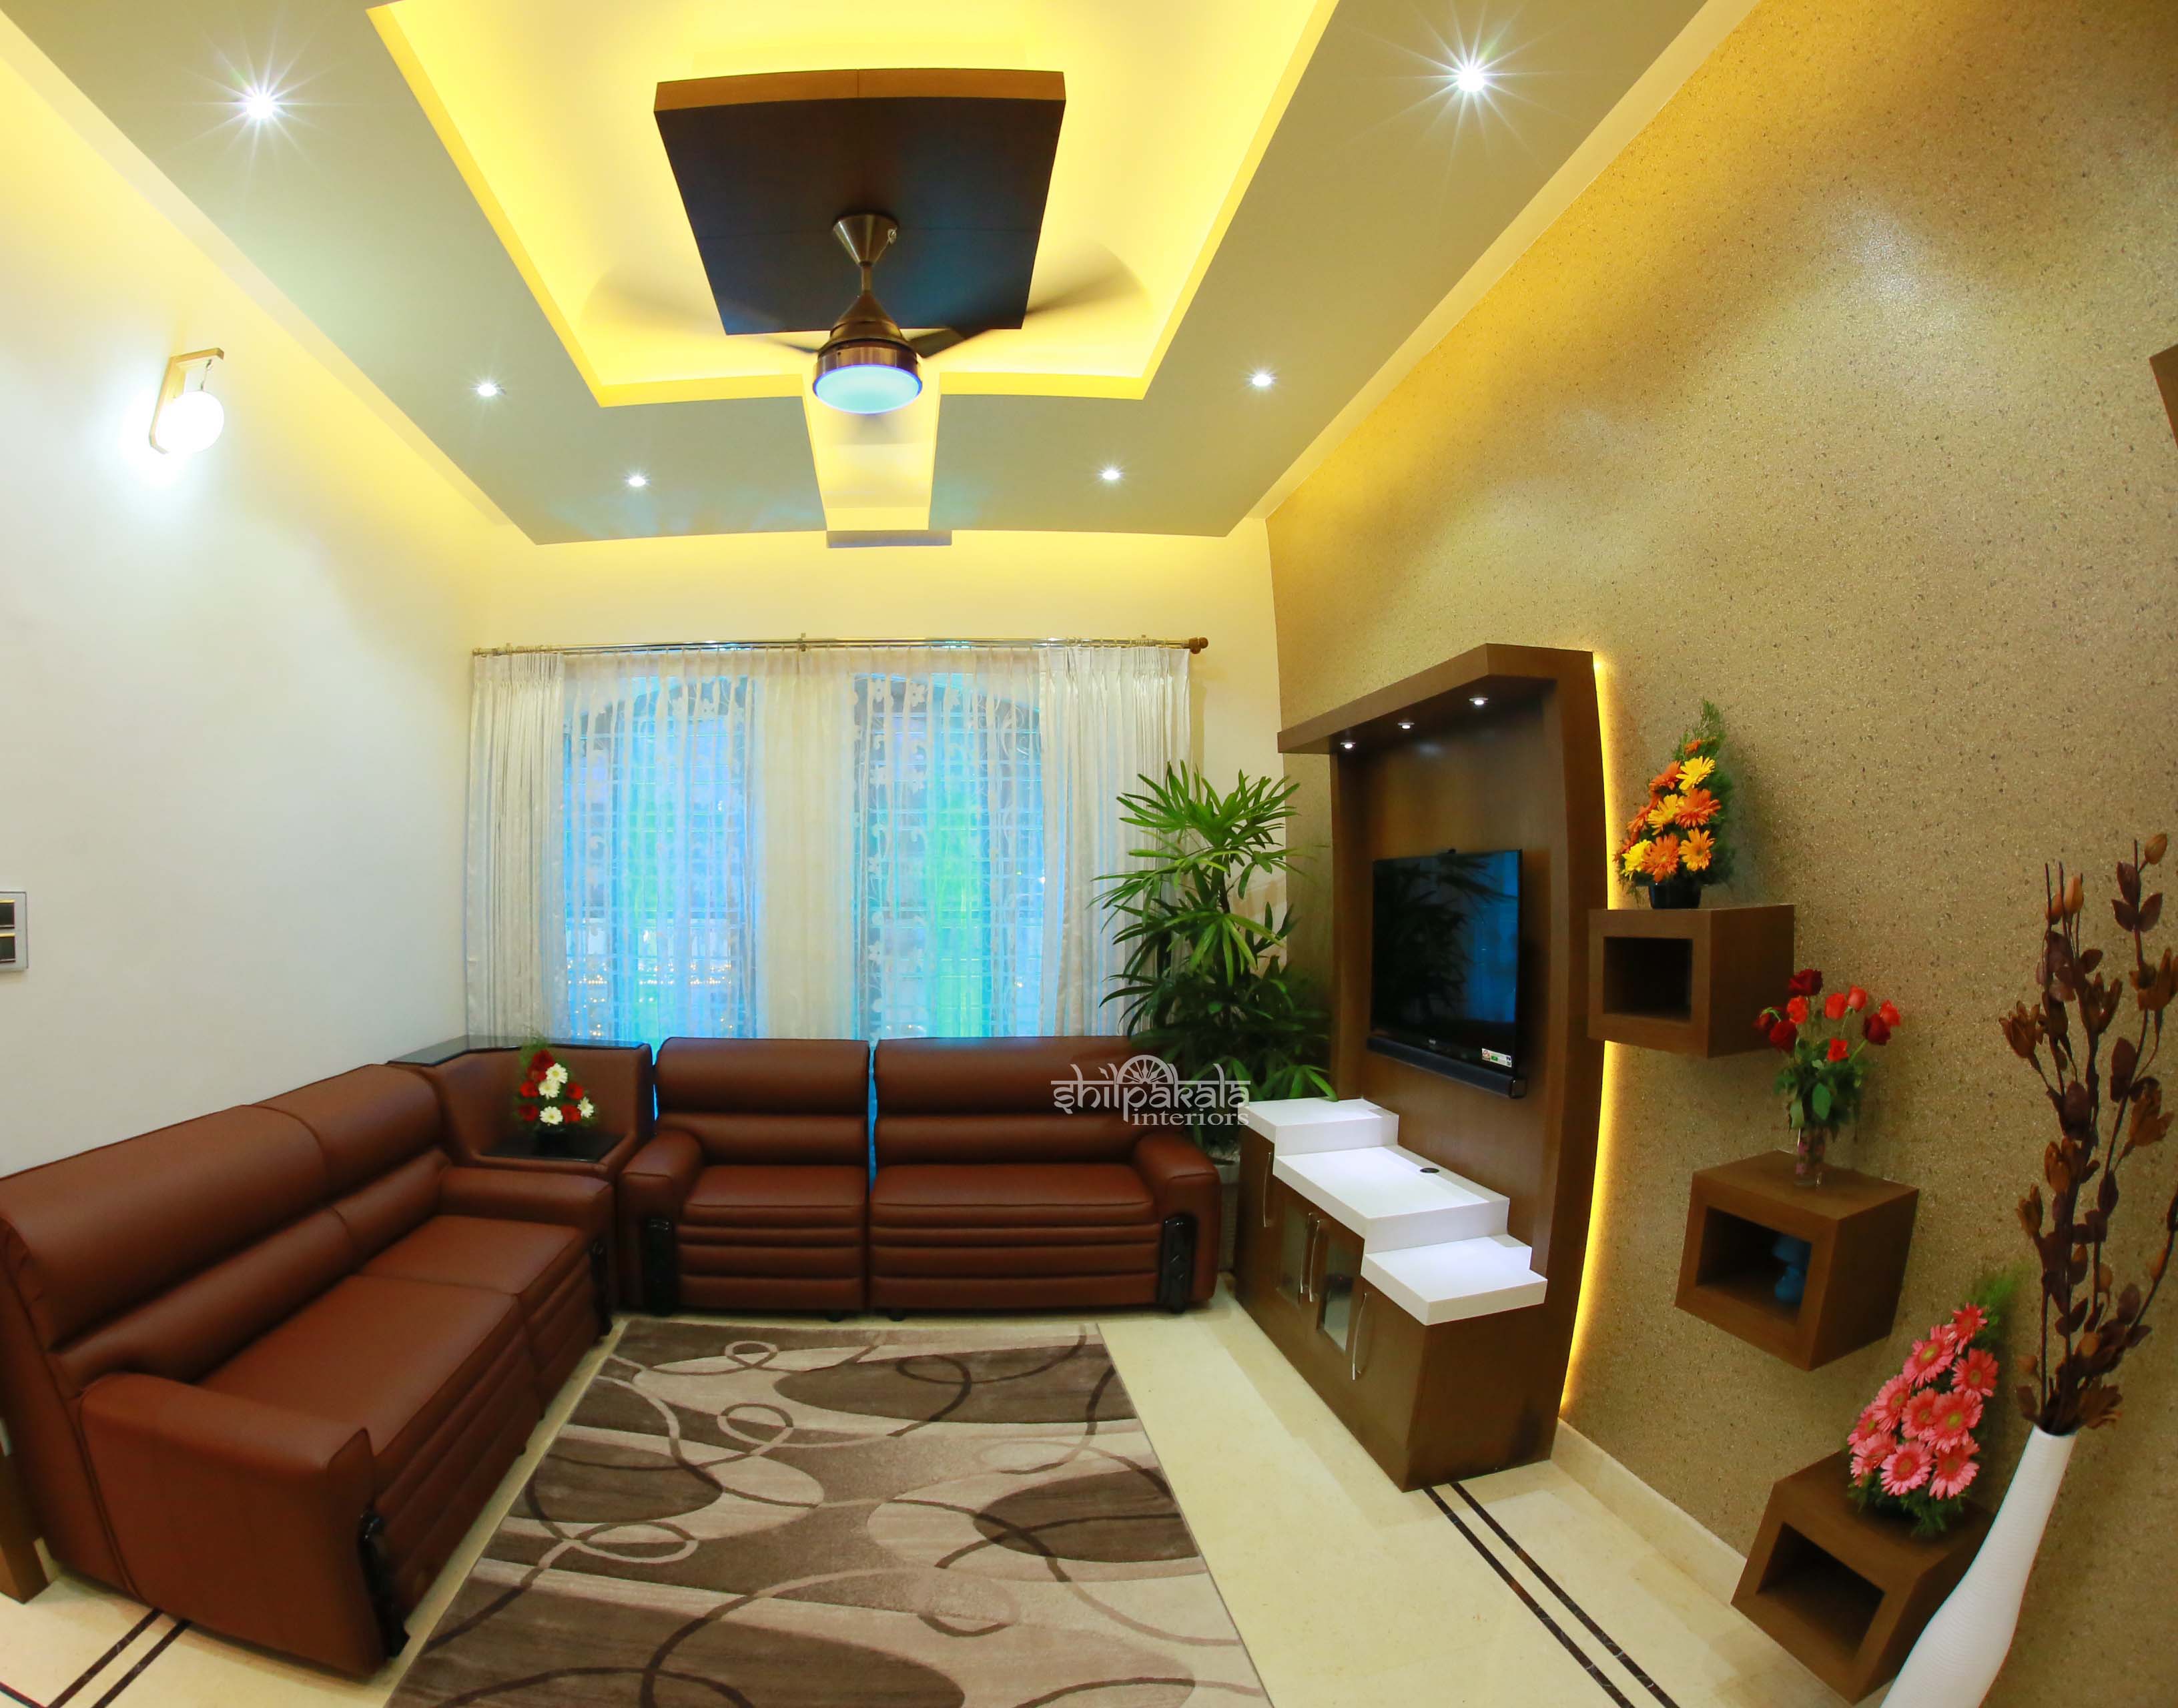  Kerala Home Designs Interior Design with Simple Decor